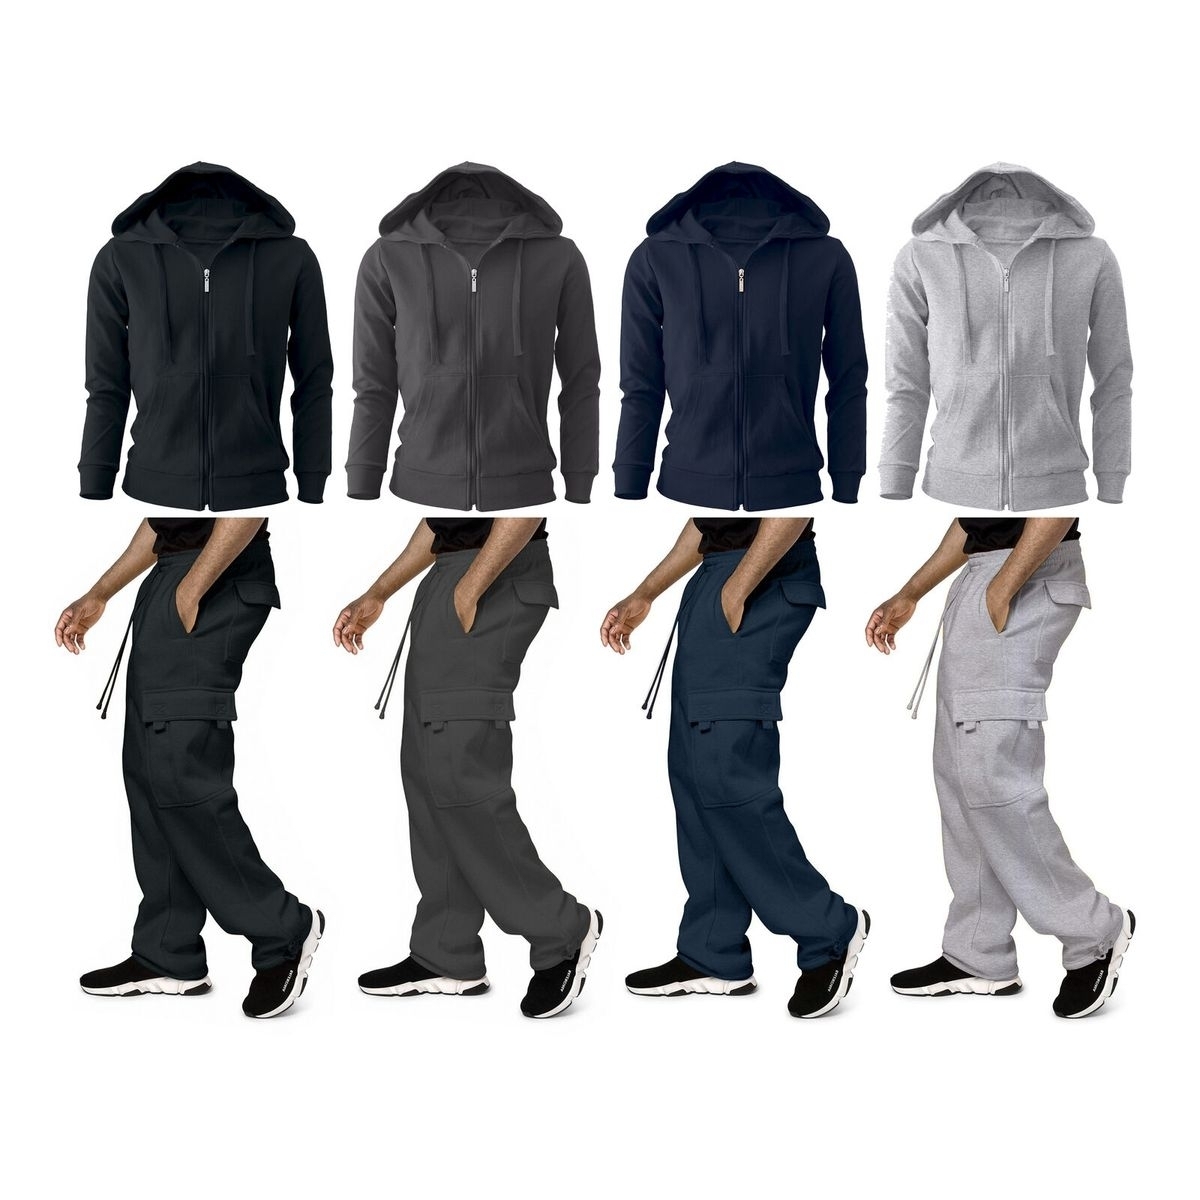 Men's Big & Tall Winter Warm Athletic Active Cozy Fleece Lined Multi-Pocket Full Zip Up Cargo Tracksuit - Navy, Small